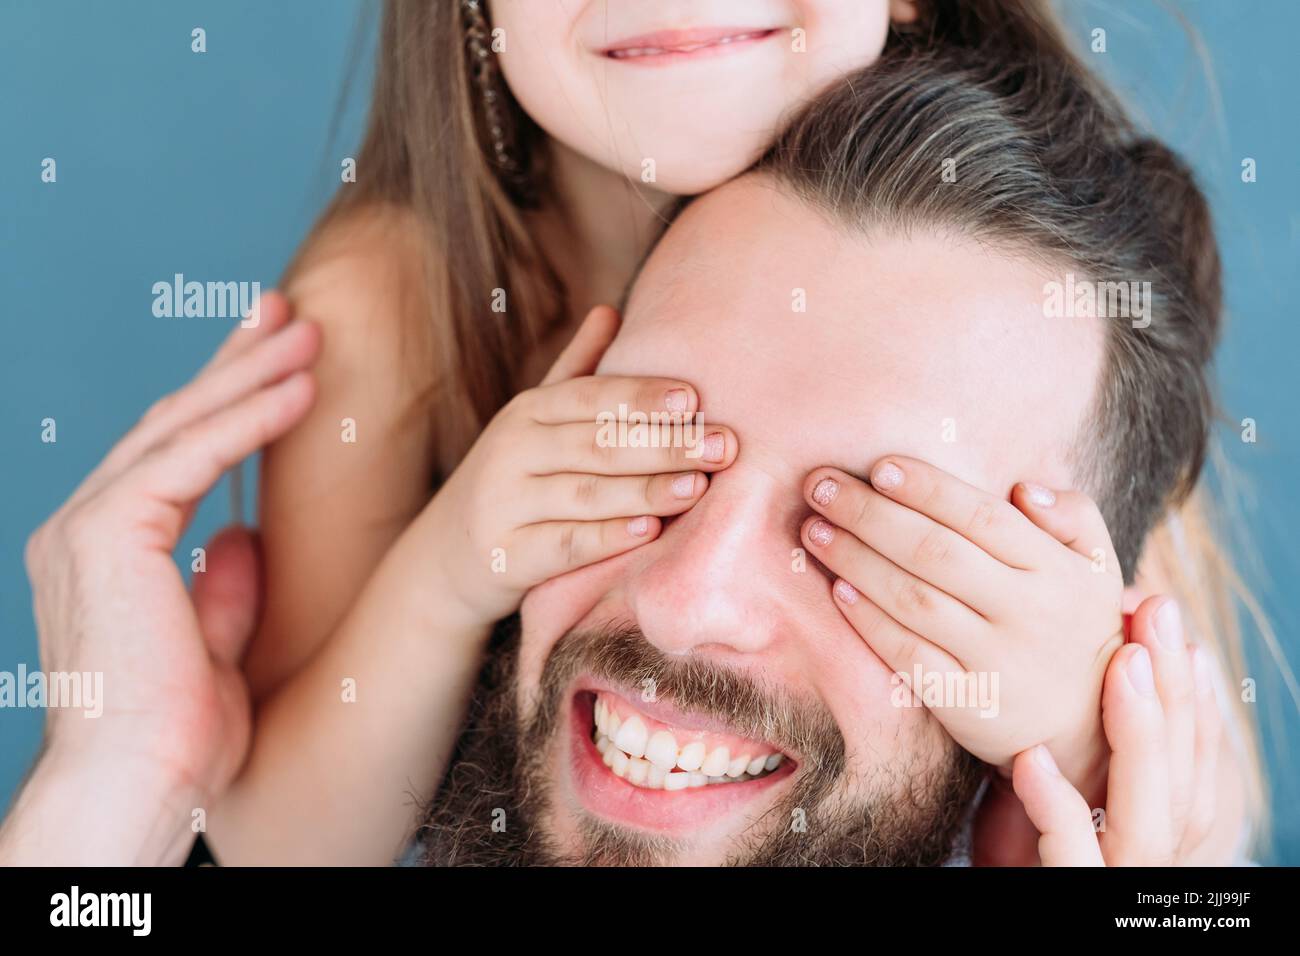 delight enjoyment girl cover dad eyes fun leisure Stock Photo